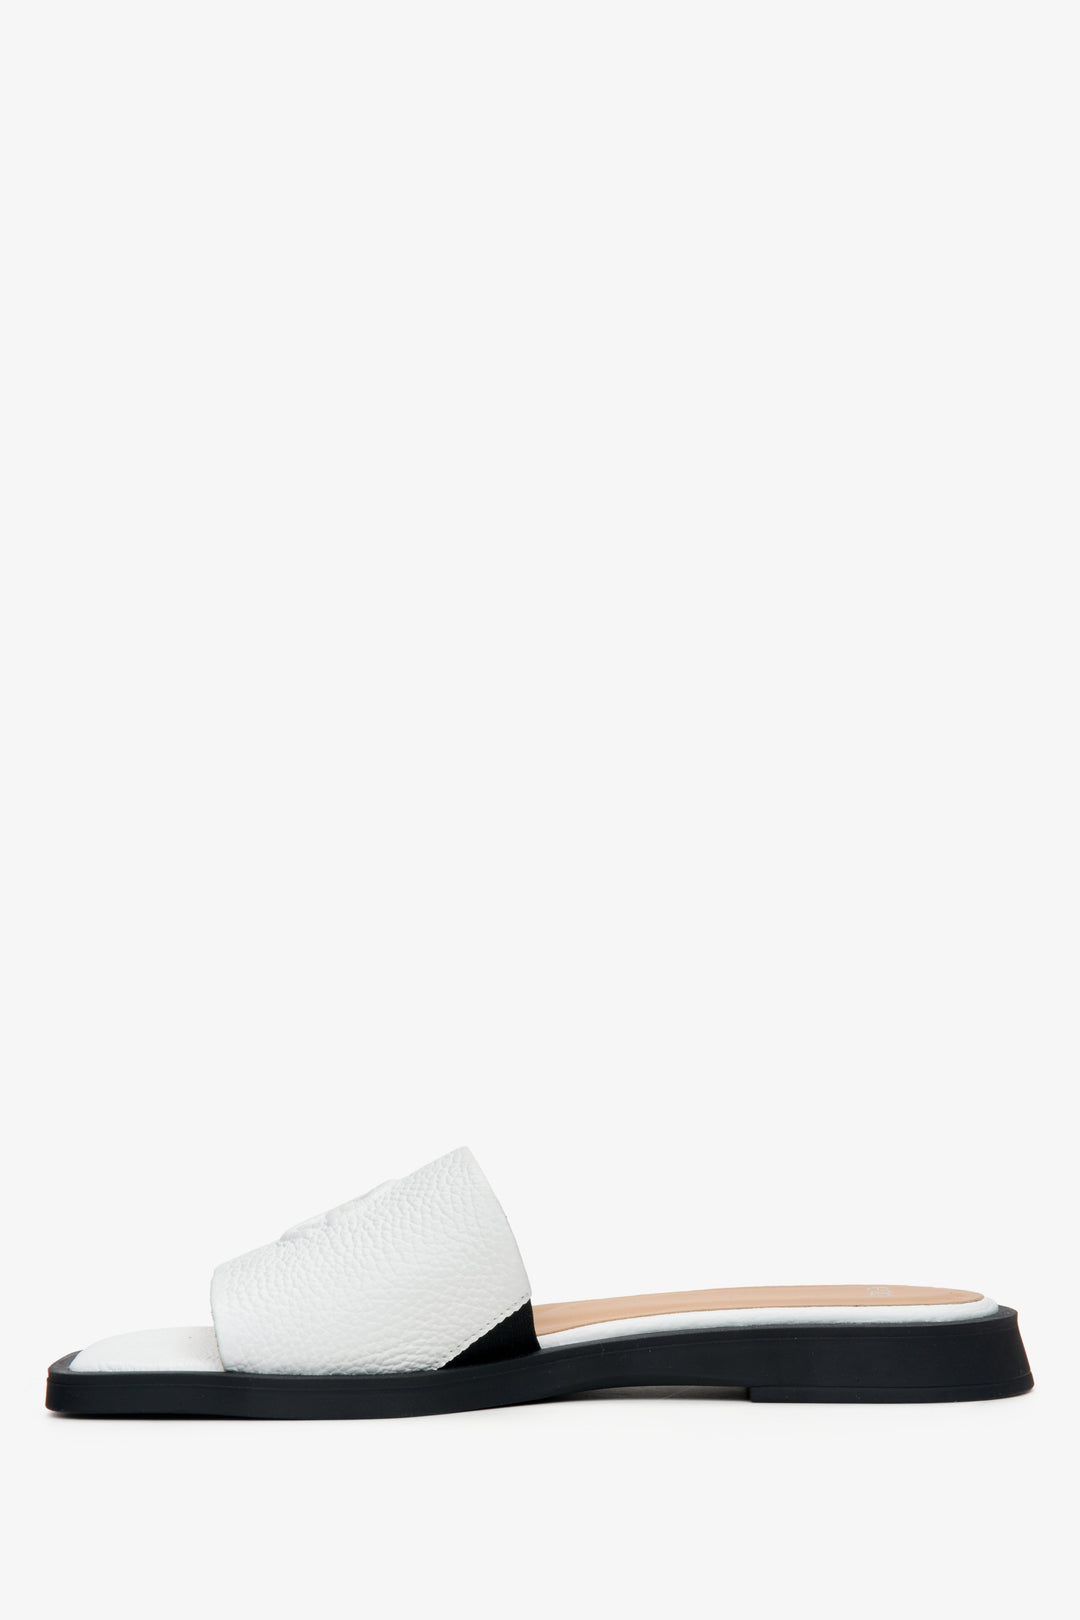 Women's white leather flat sandals by Estro - shoe profile.